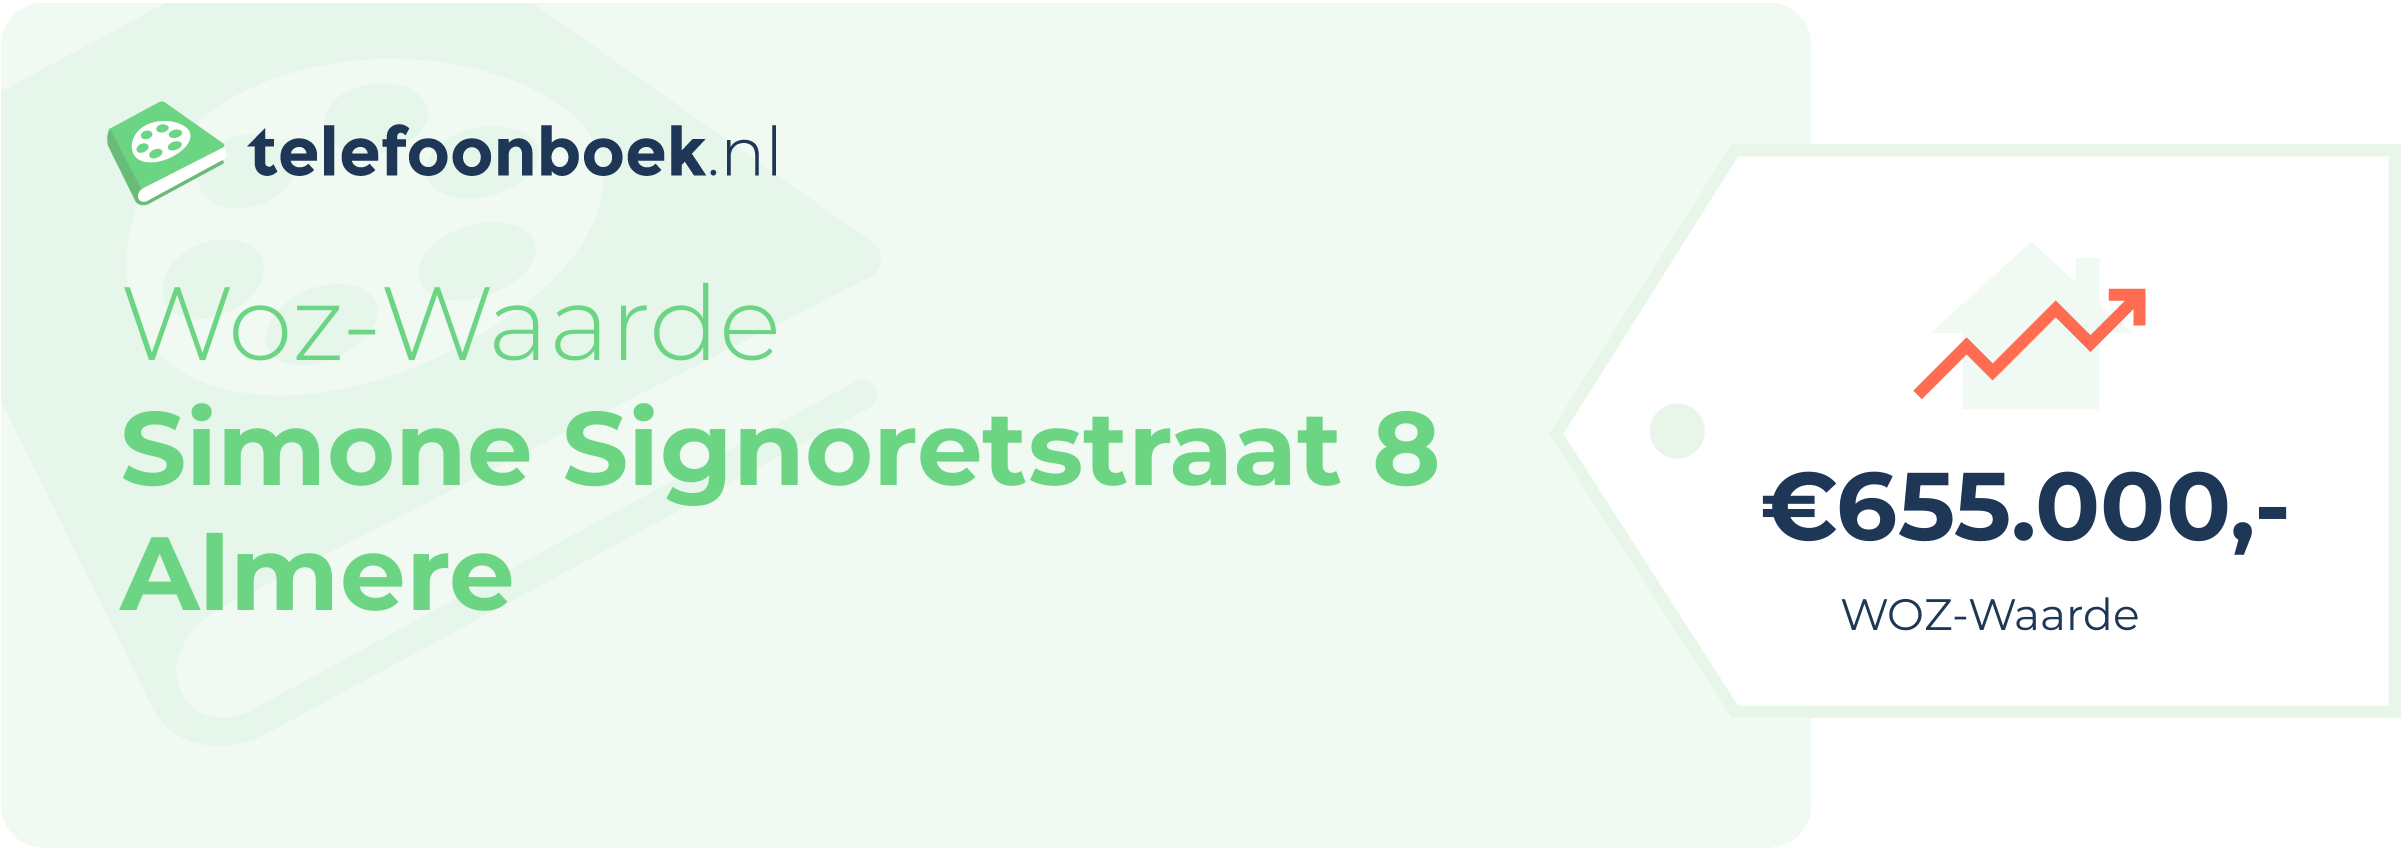 WOZ-waarde Simone Signoretstraat 8 Almere